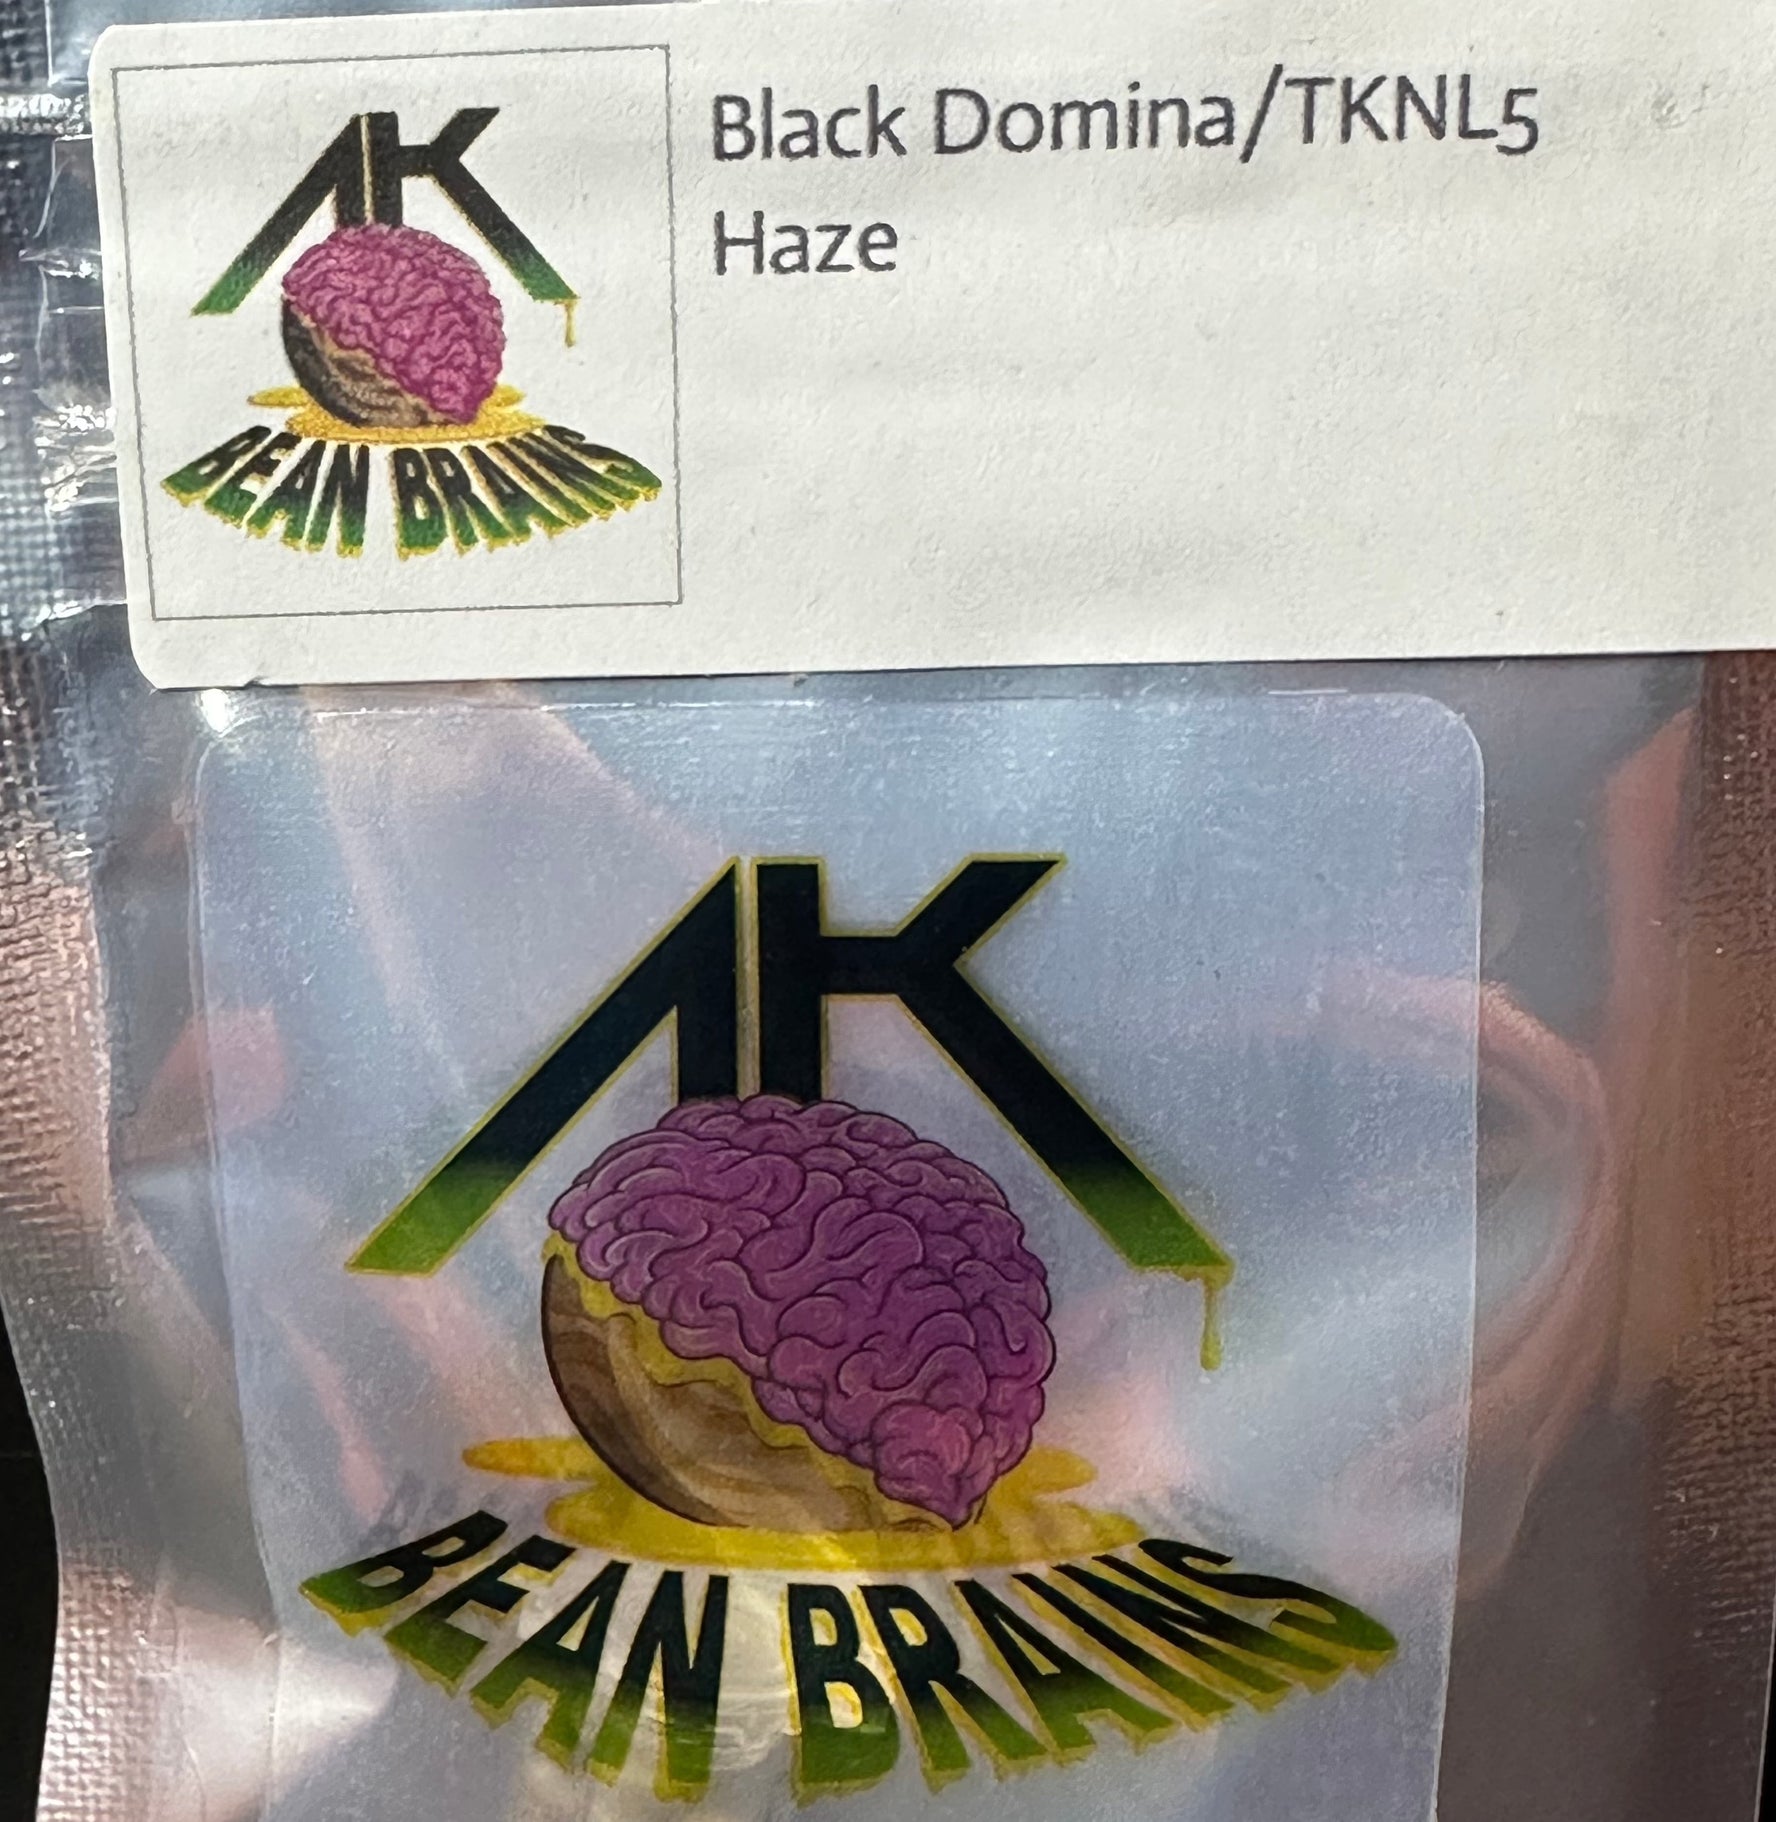 AK Bean Brains - Black Domina/TKNL5 Haze